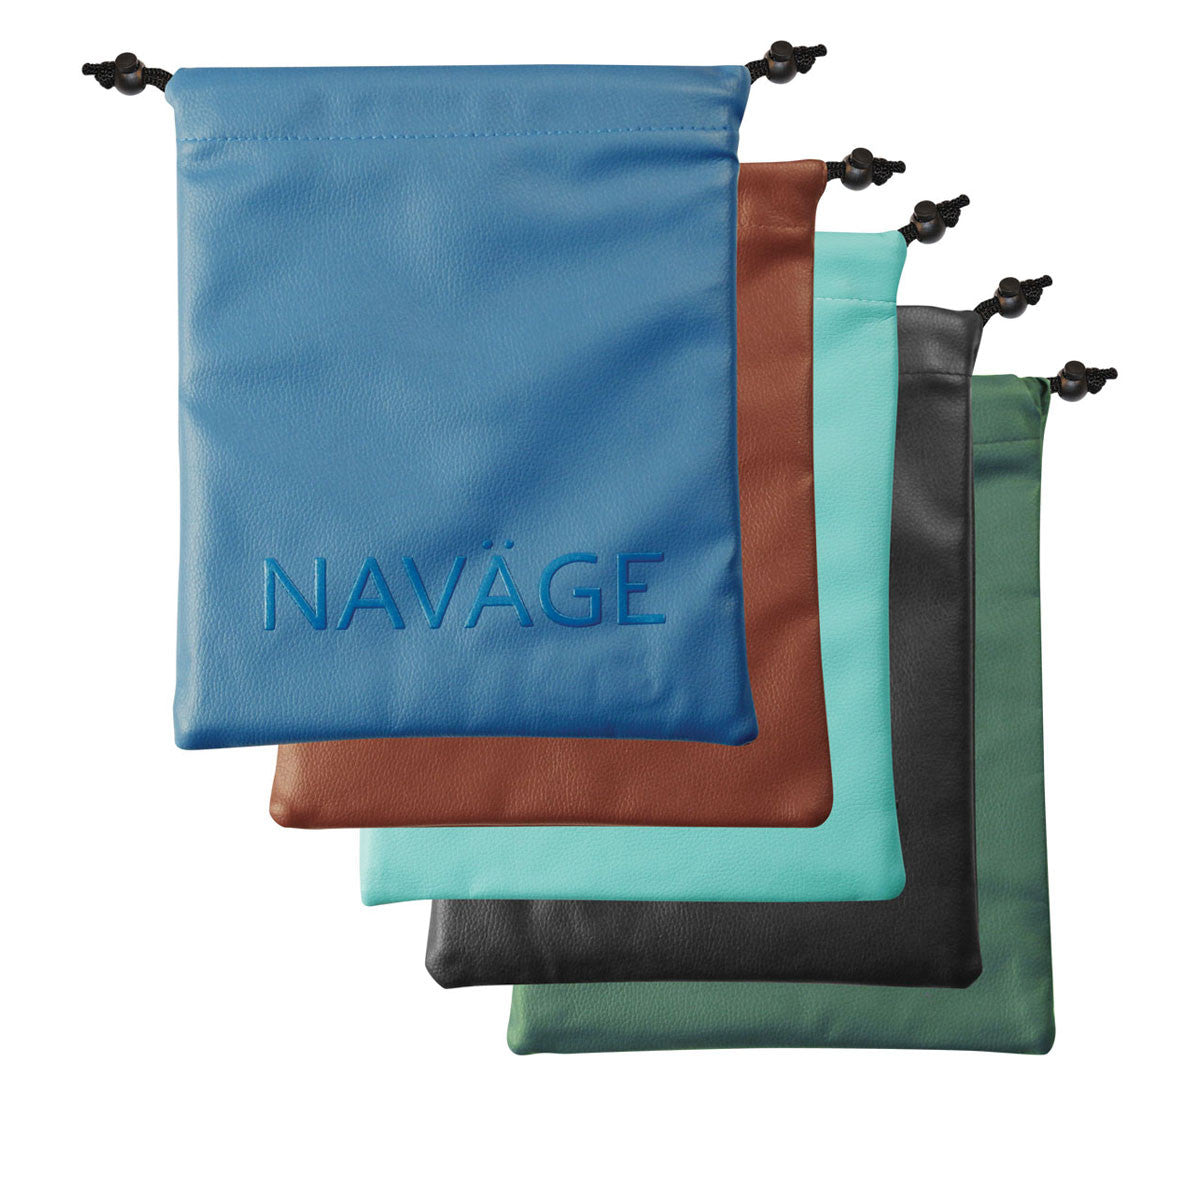 Paquete de viaje Navage: limpiador de nariz, 20 SaltPods, bolsa de viaje